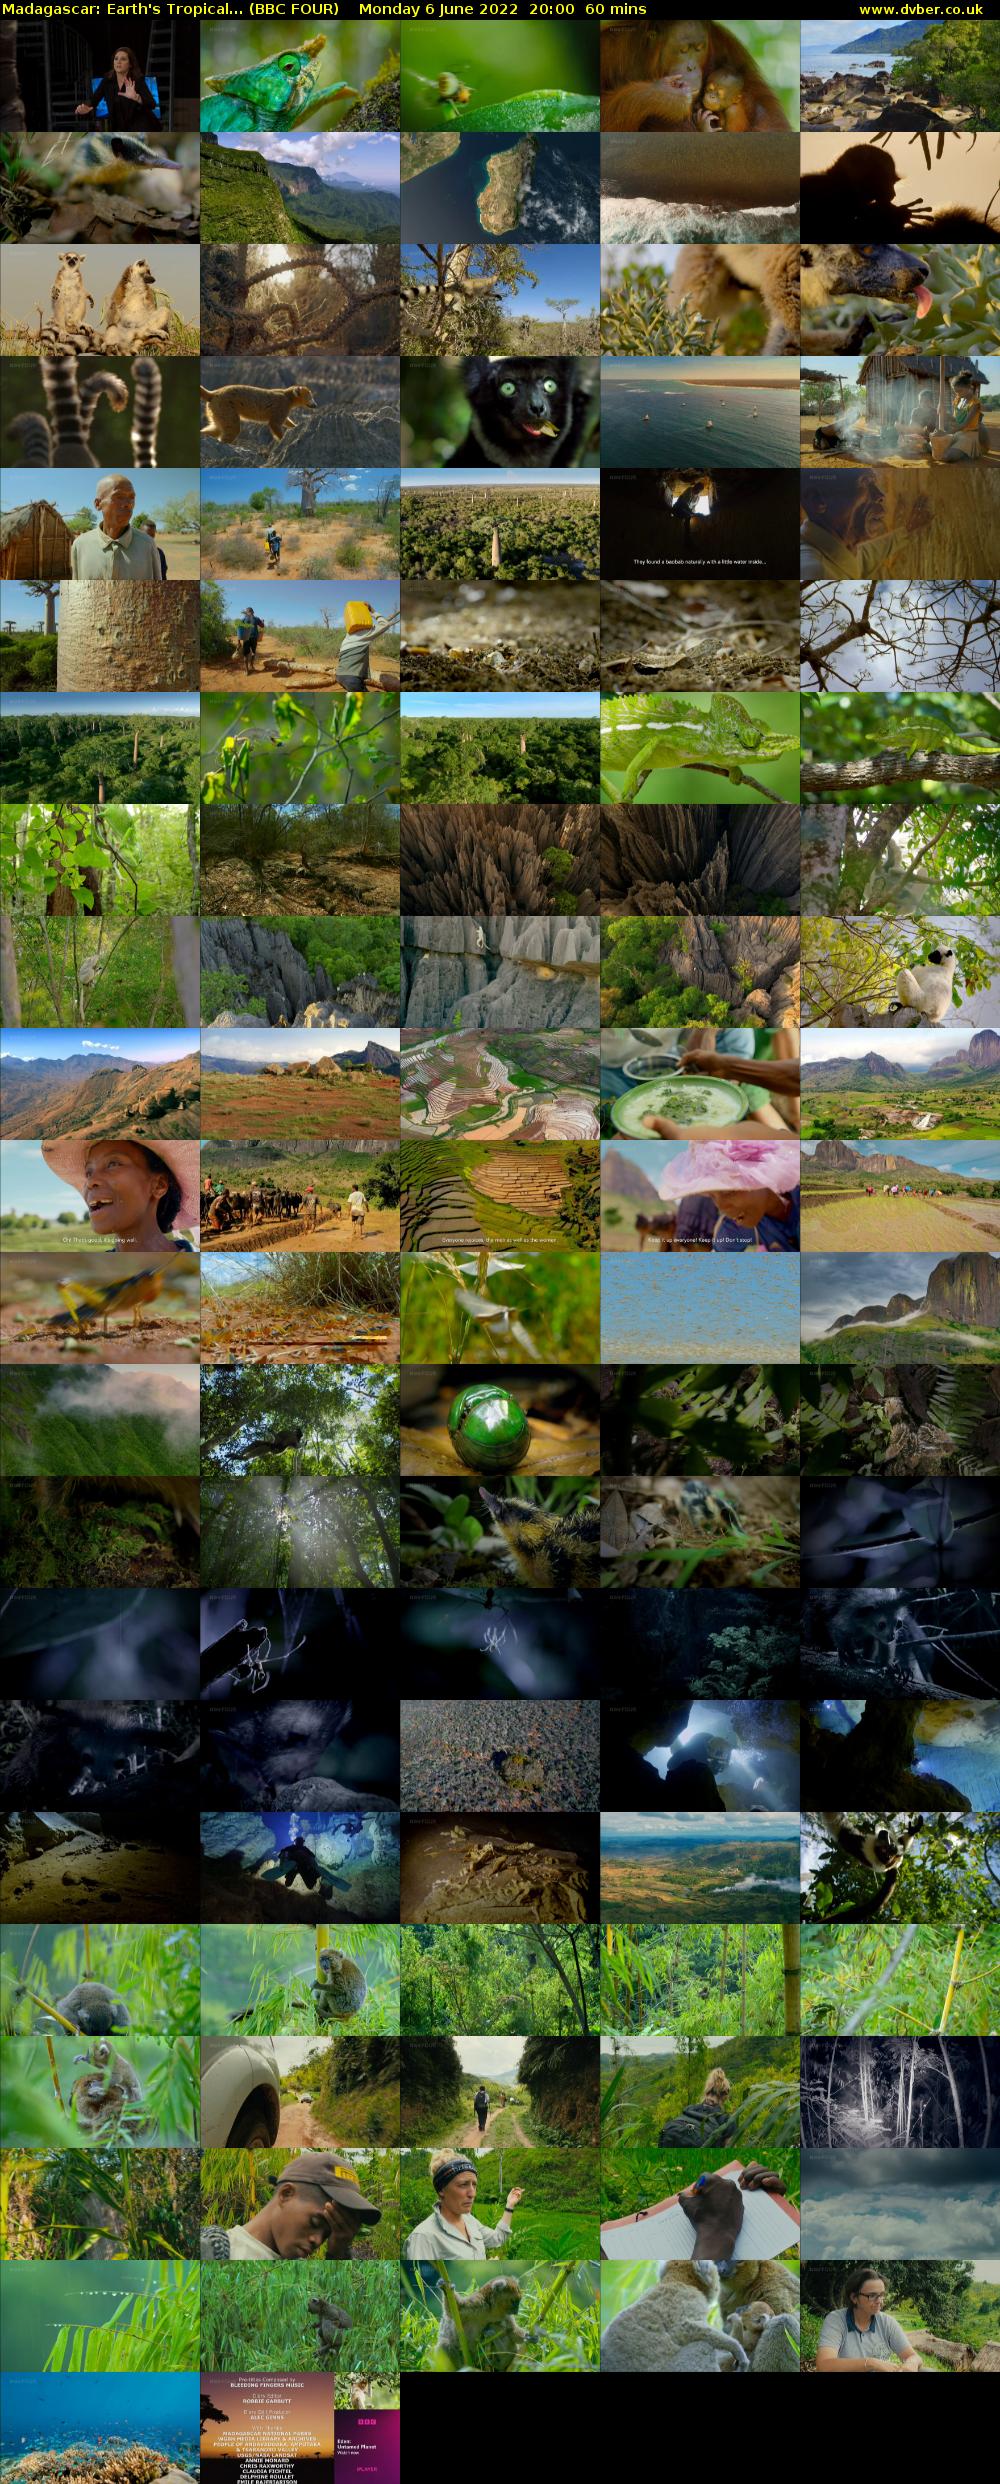 Madagascar: Earth's Tropical... (BBC FOUR) Monday 6 June 2022 20:00 - 21:00